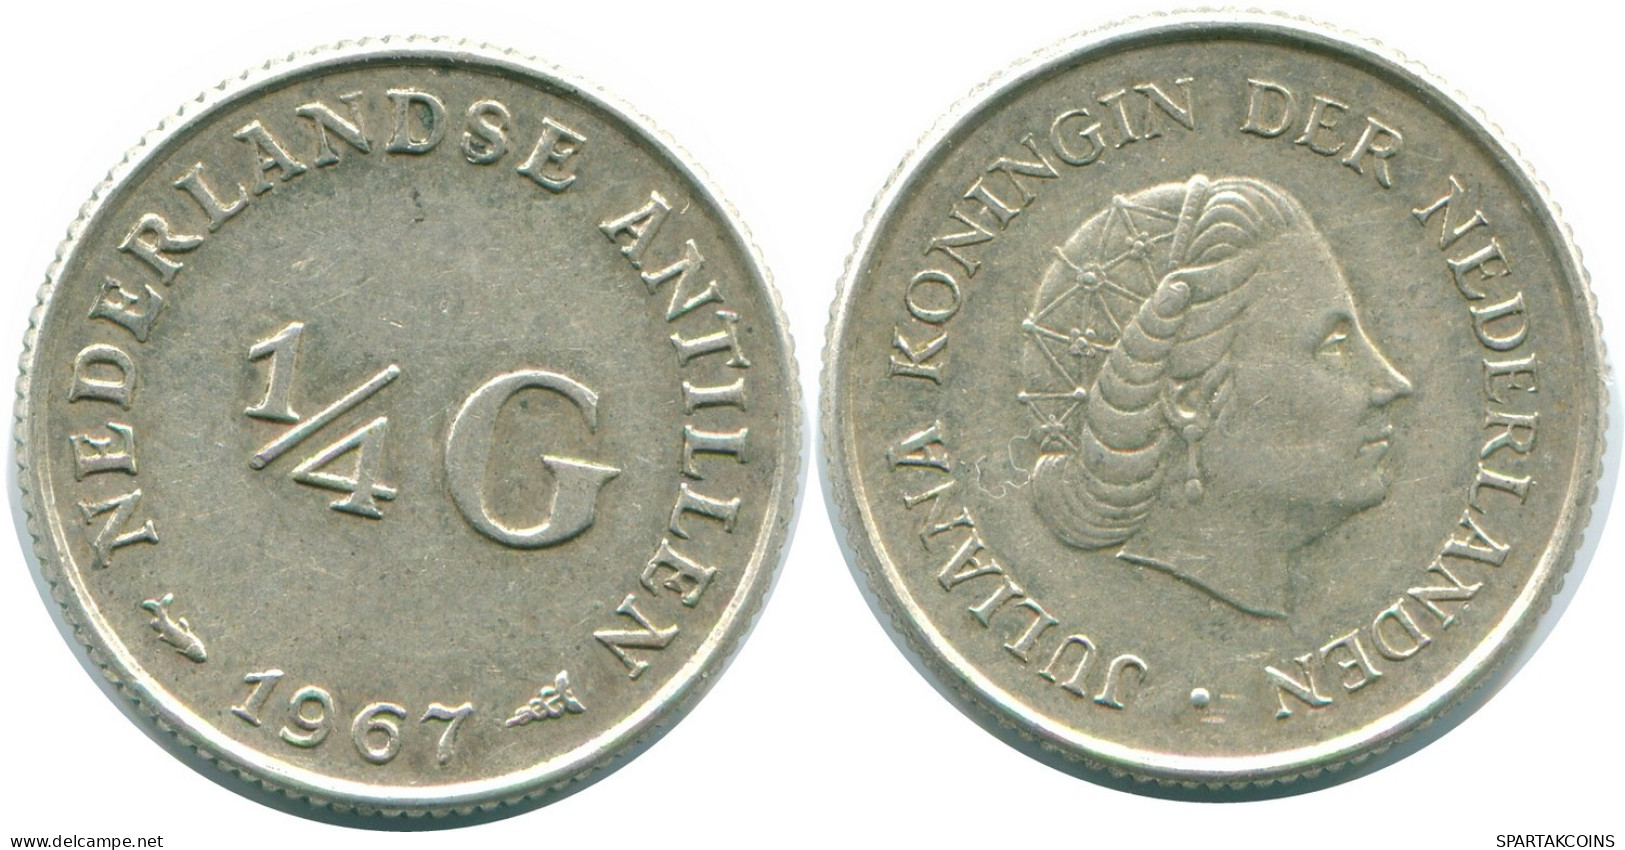 1/4 GULDEN 1967 NIEDERLÄNDISCHE ANTILLEN SILBER Koloniale Münze #NL11480.4.D.A - Netherlands Antilles